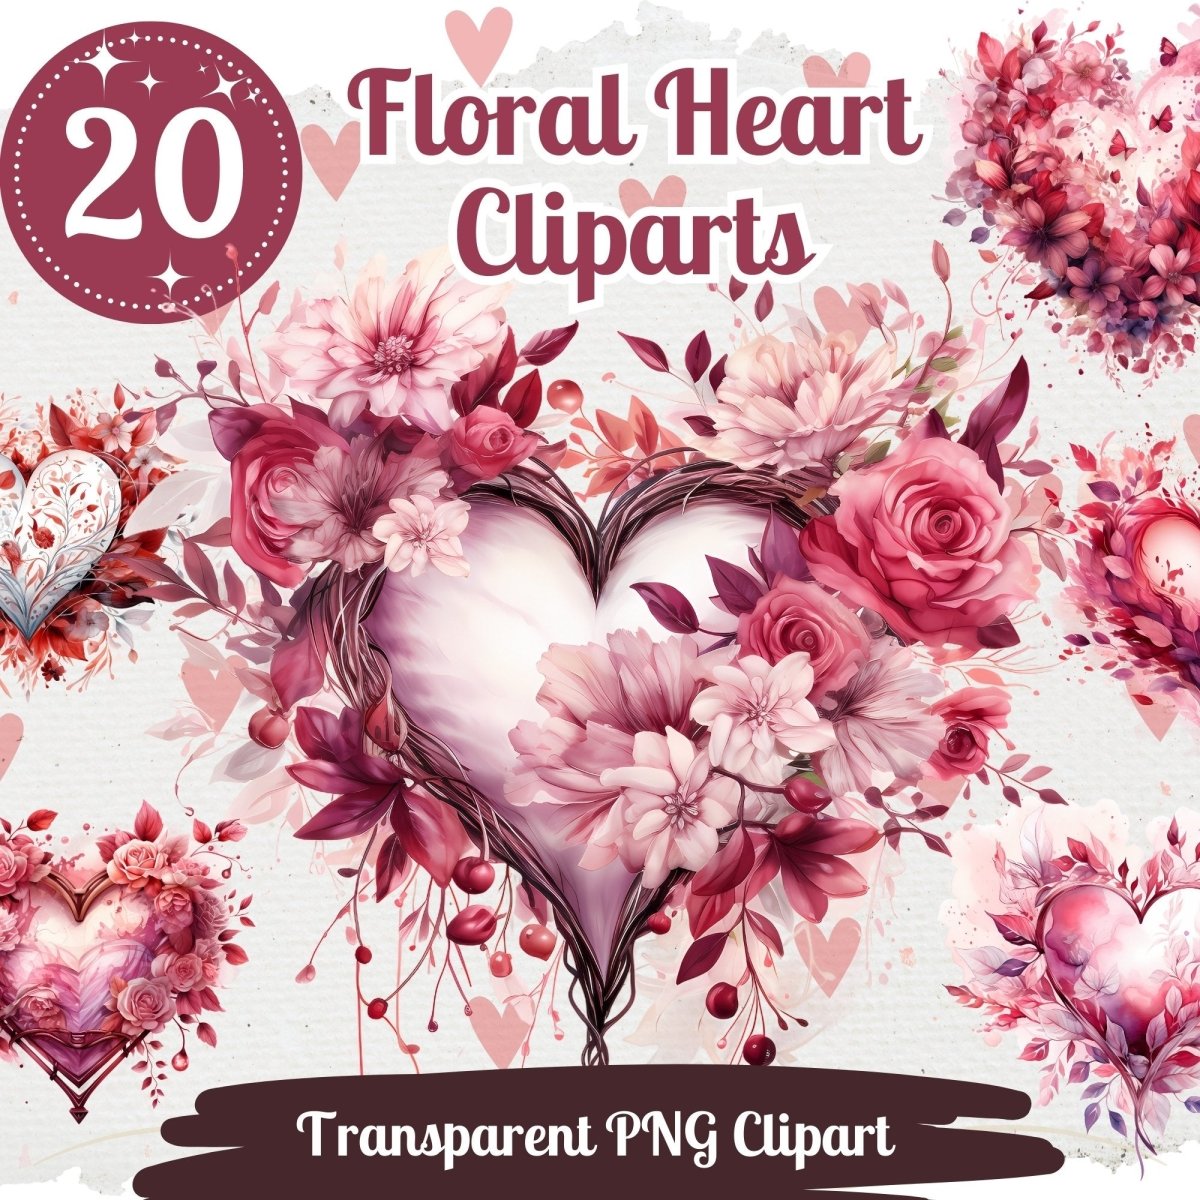 Patterned Hearts Clip Art Set